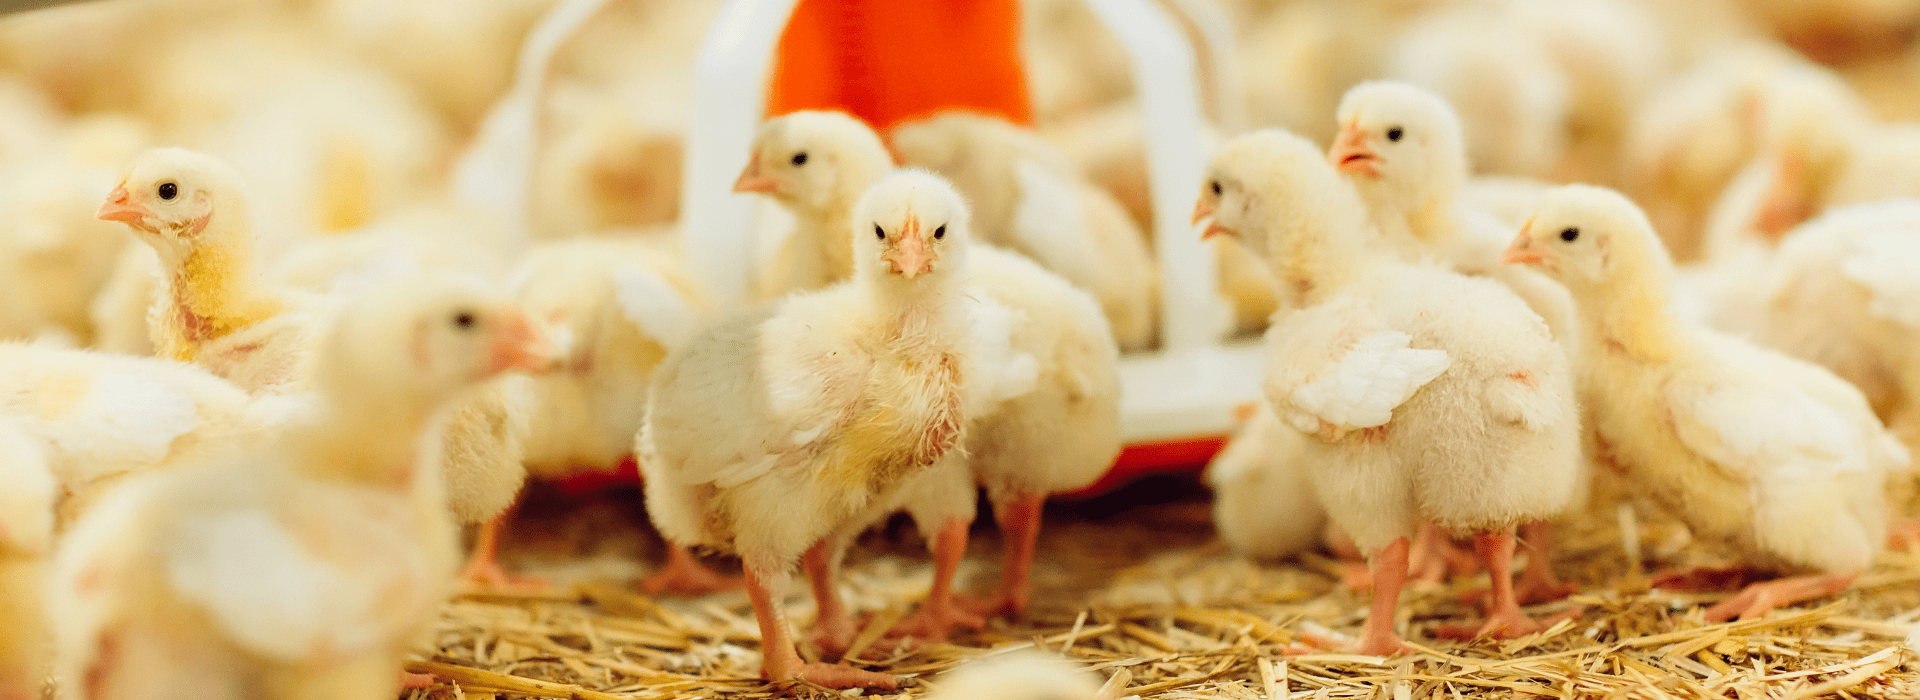 élevage avicole